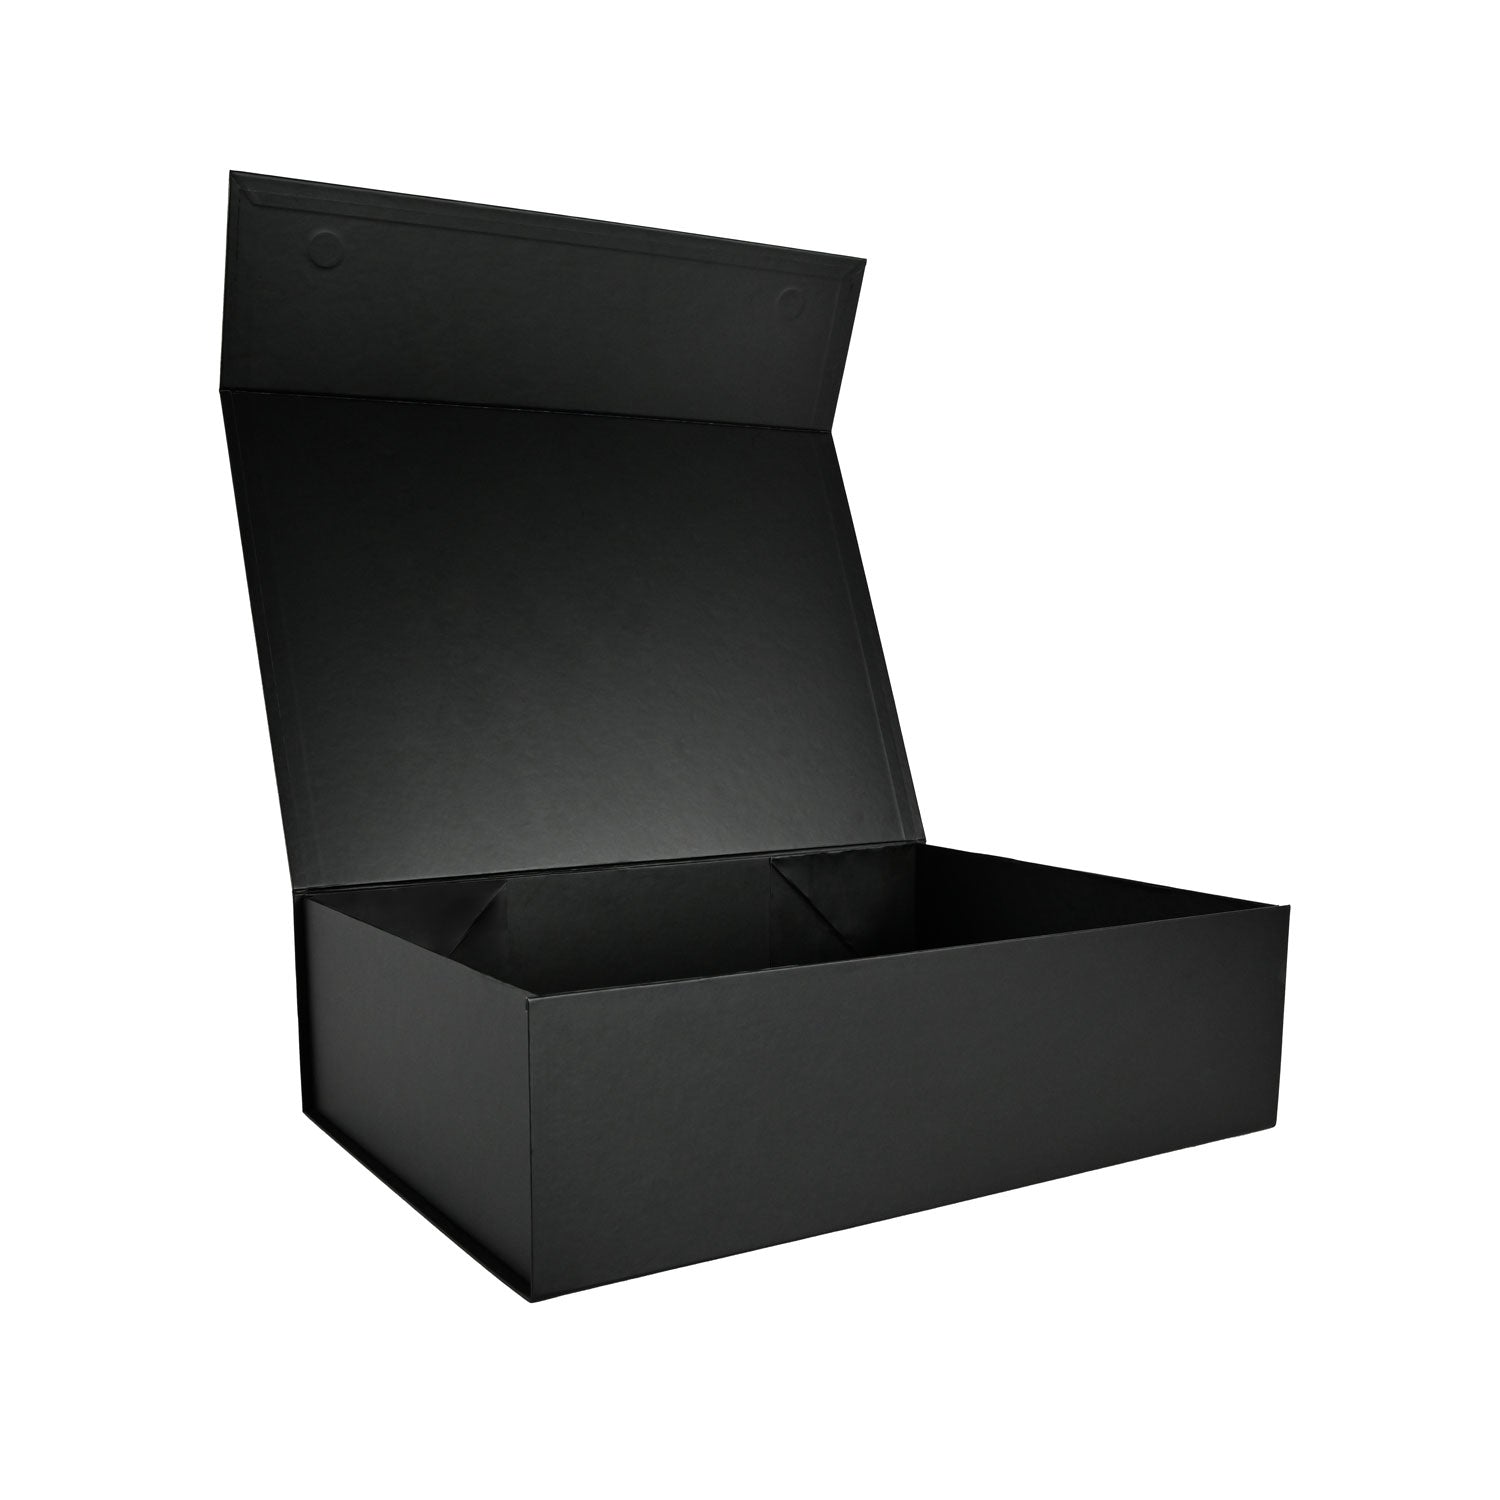 empty large black gift box